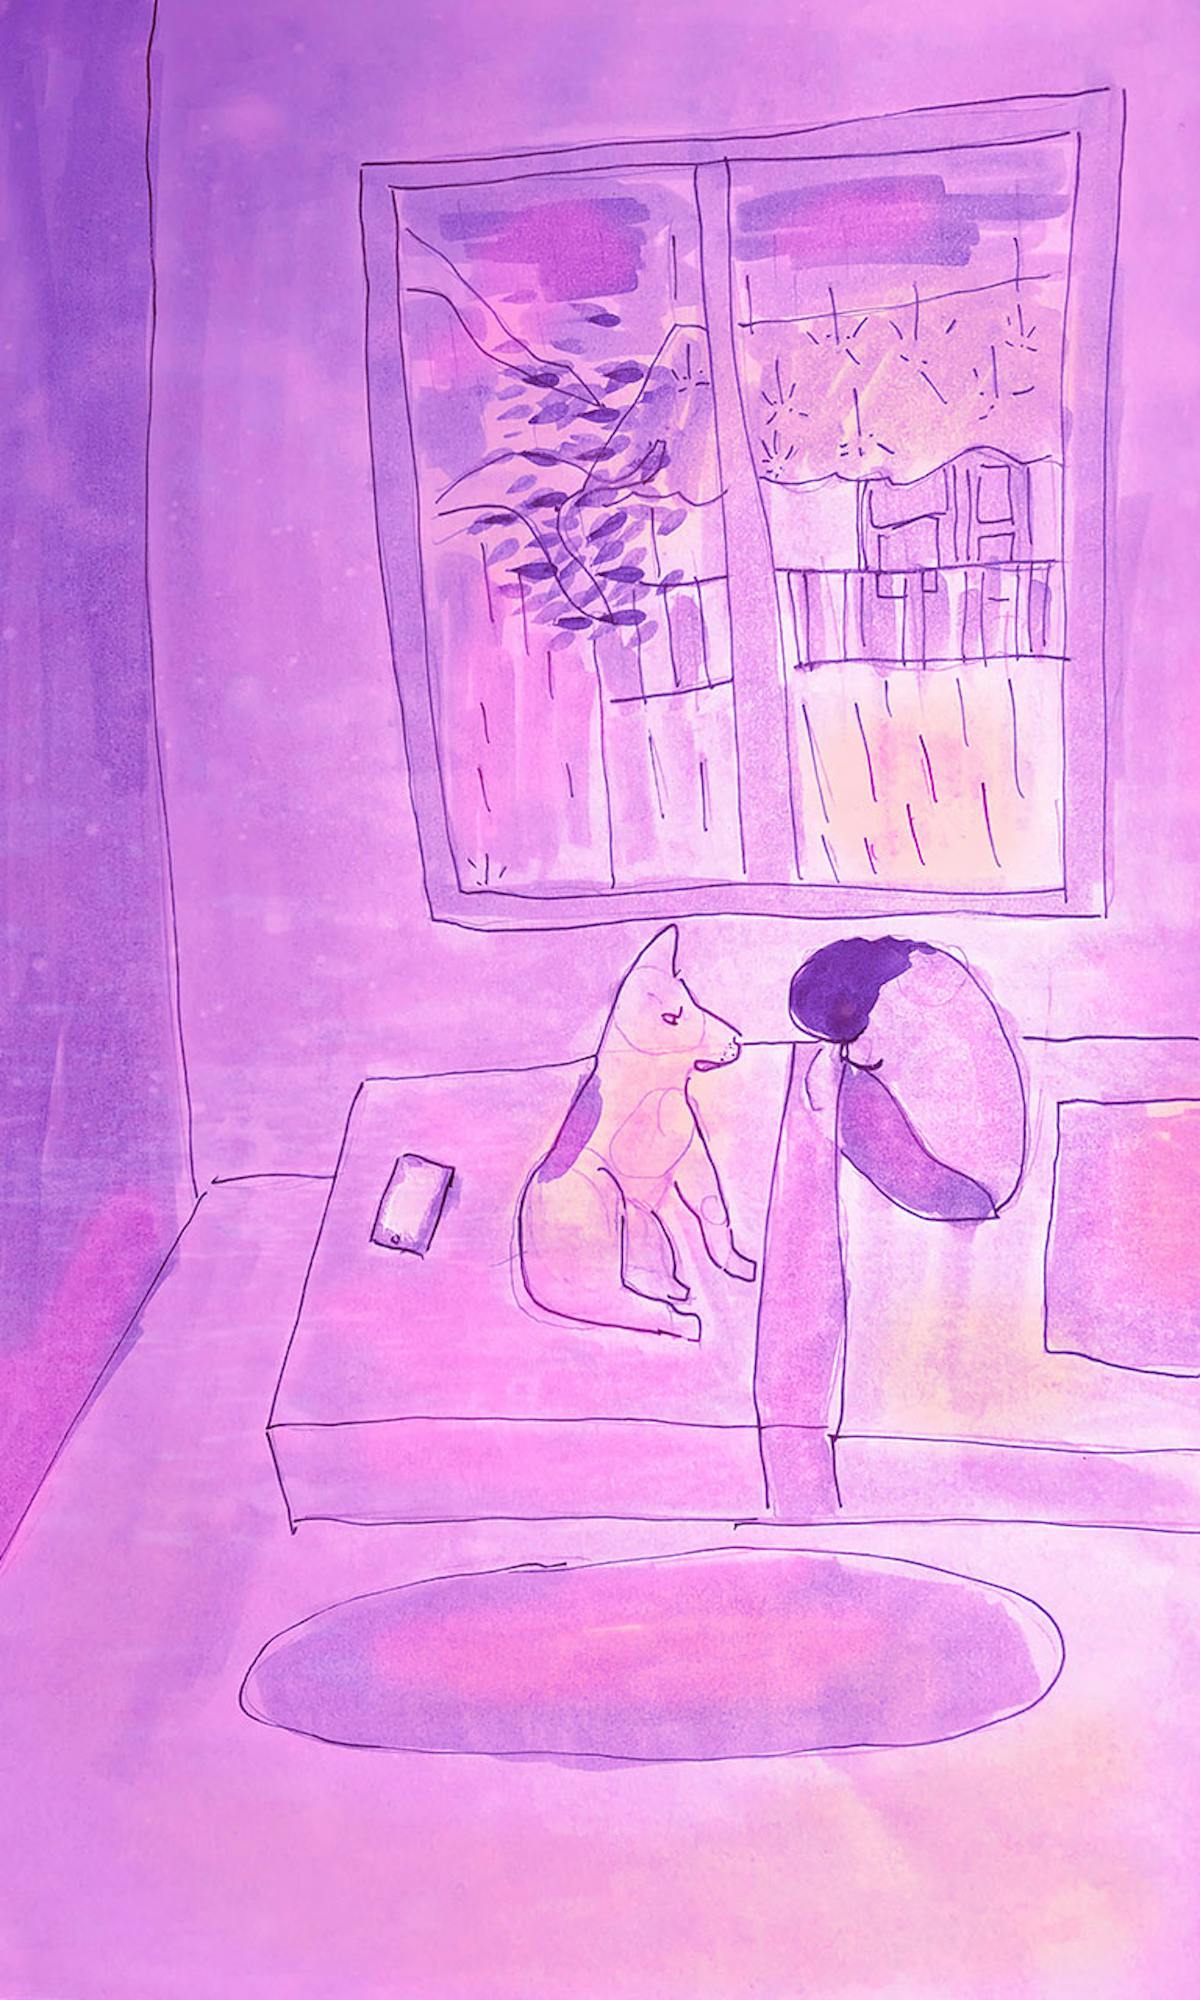 Garitma, fondo de pantalla para celular joven en la noche lluviosa con perro, dibujo marcador sobre papel